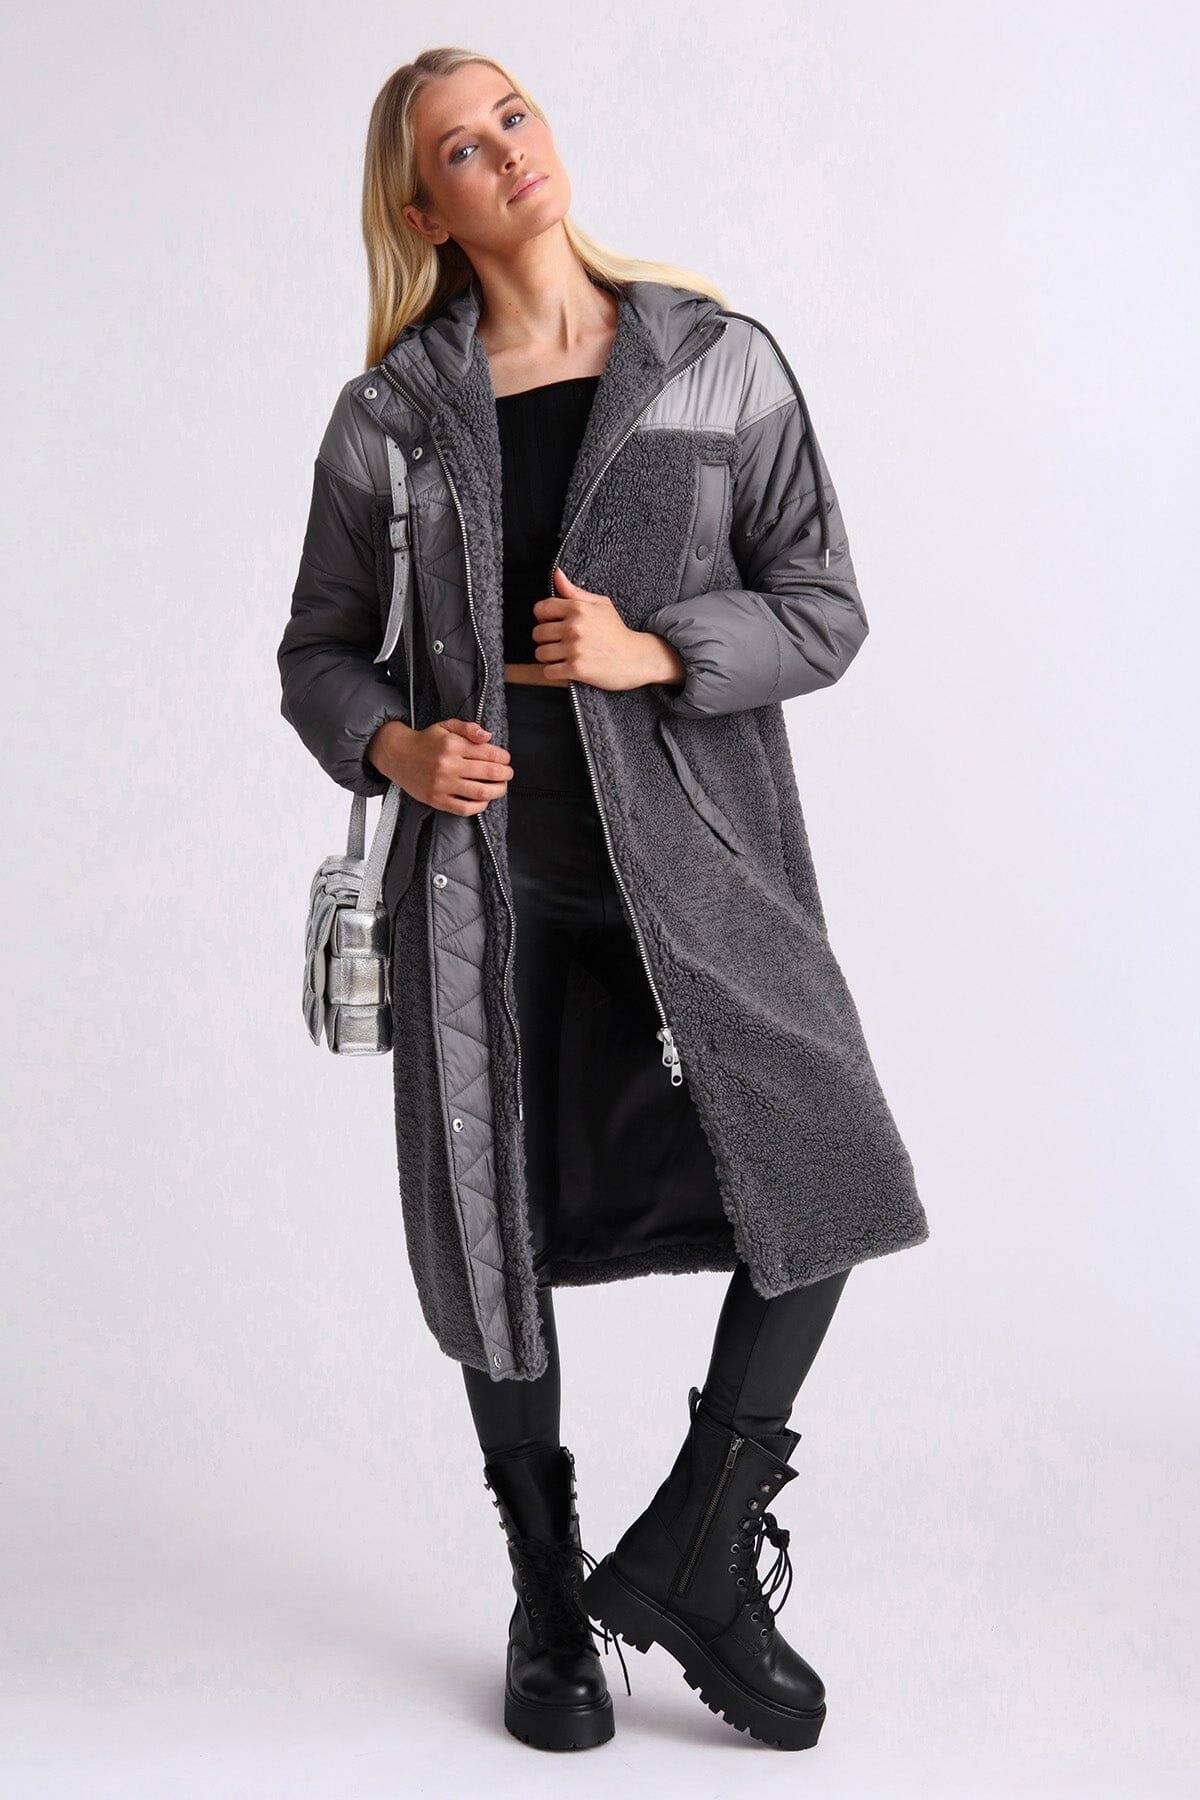 Charcoal grey mixed media faux shearling fur anorak long coat jacket - figure flattering casual streetwear coats jackets for women